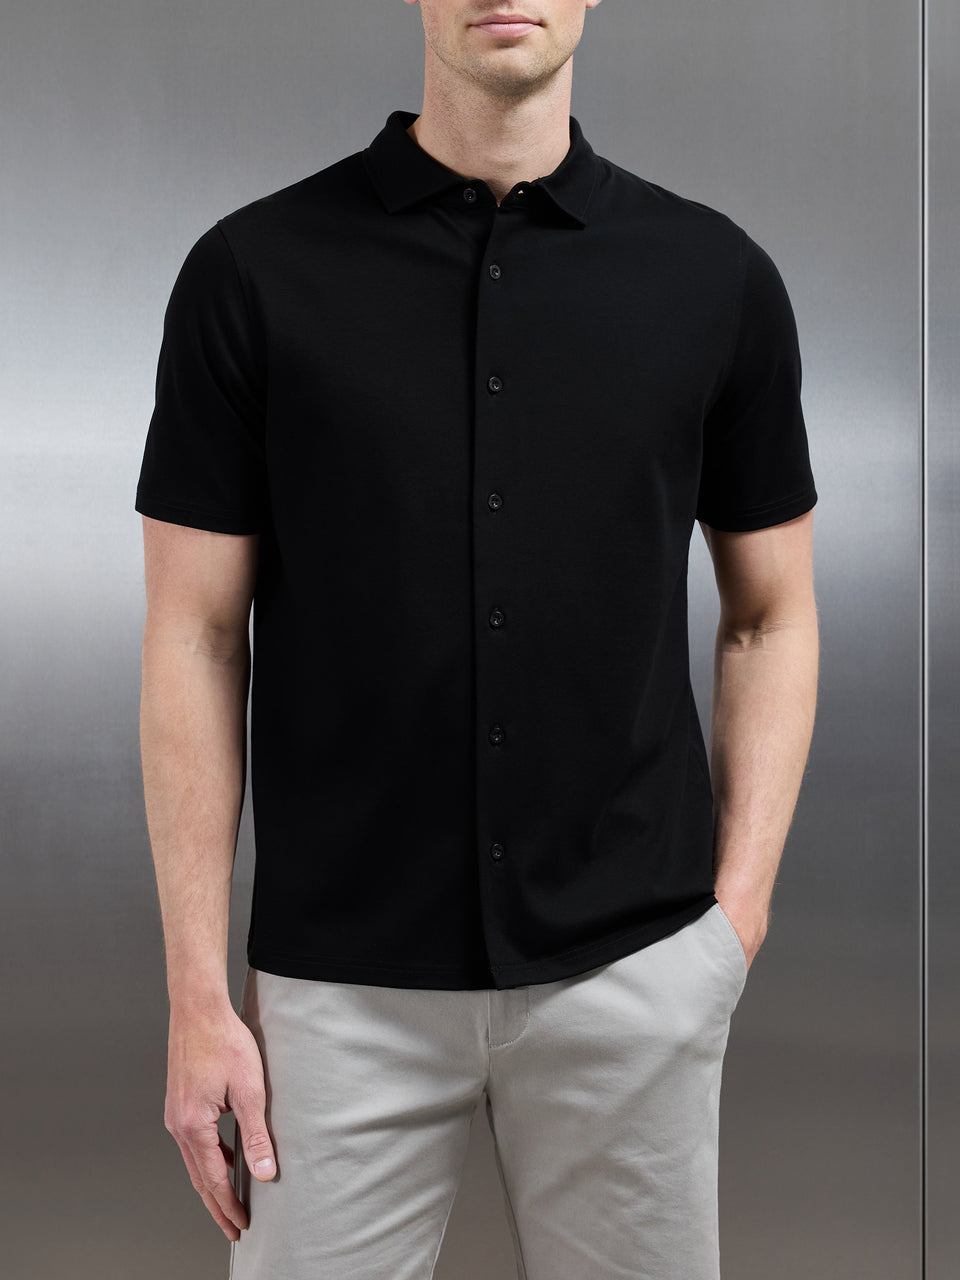 Mercerised Interlock Short Sleeve Button Through Shirt in Black